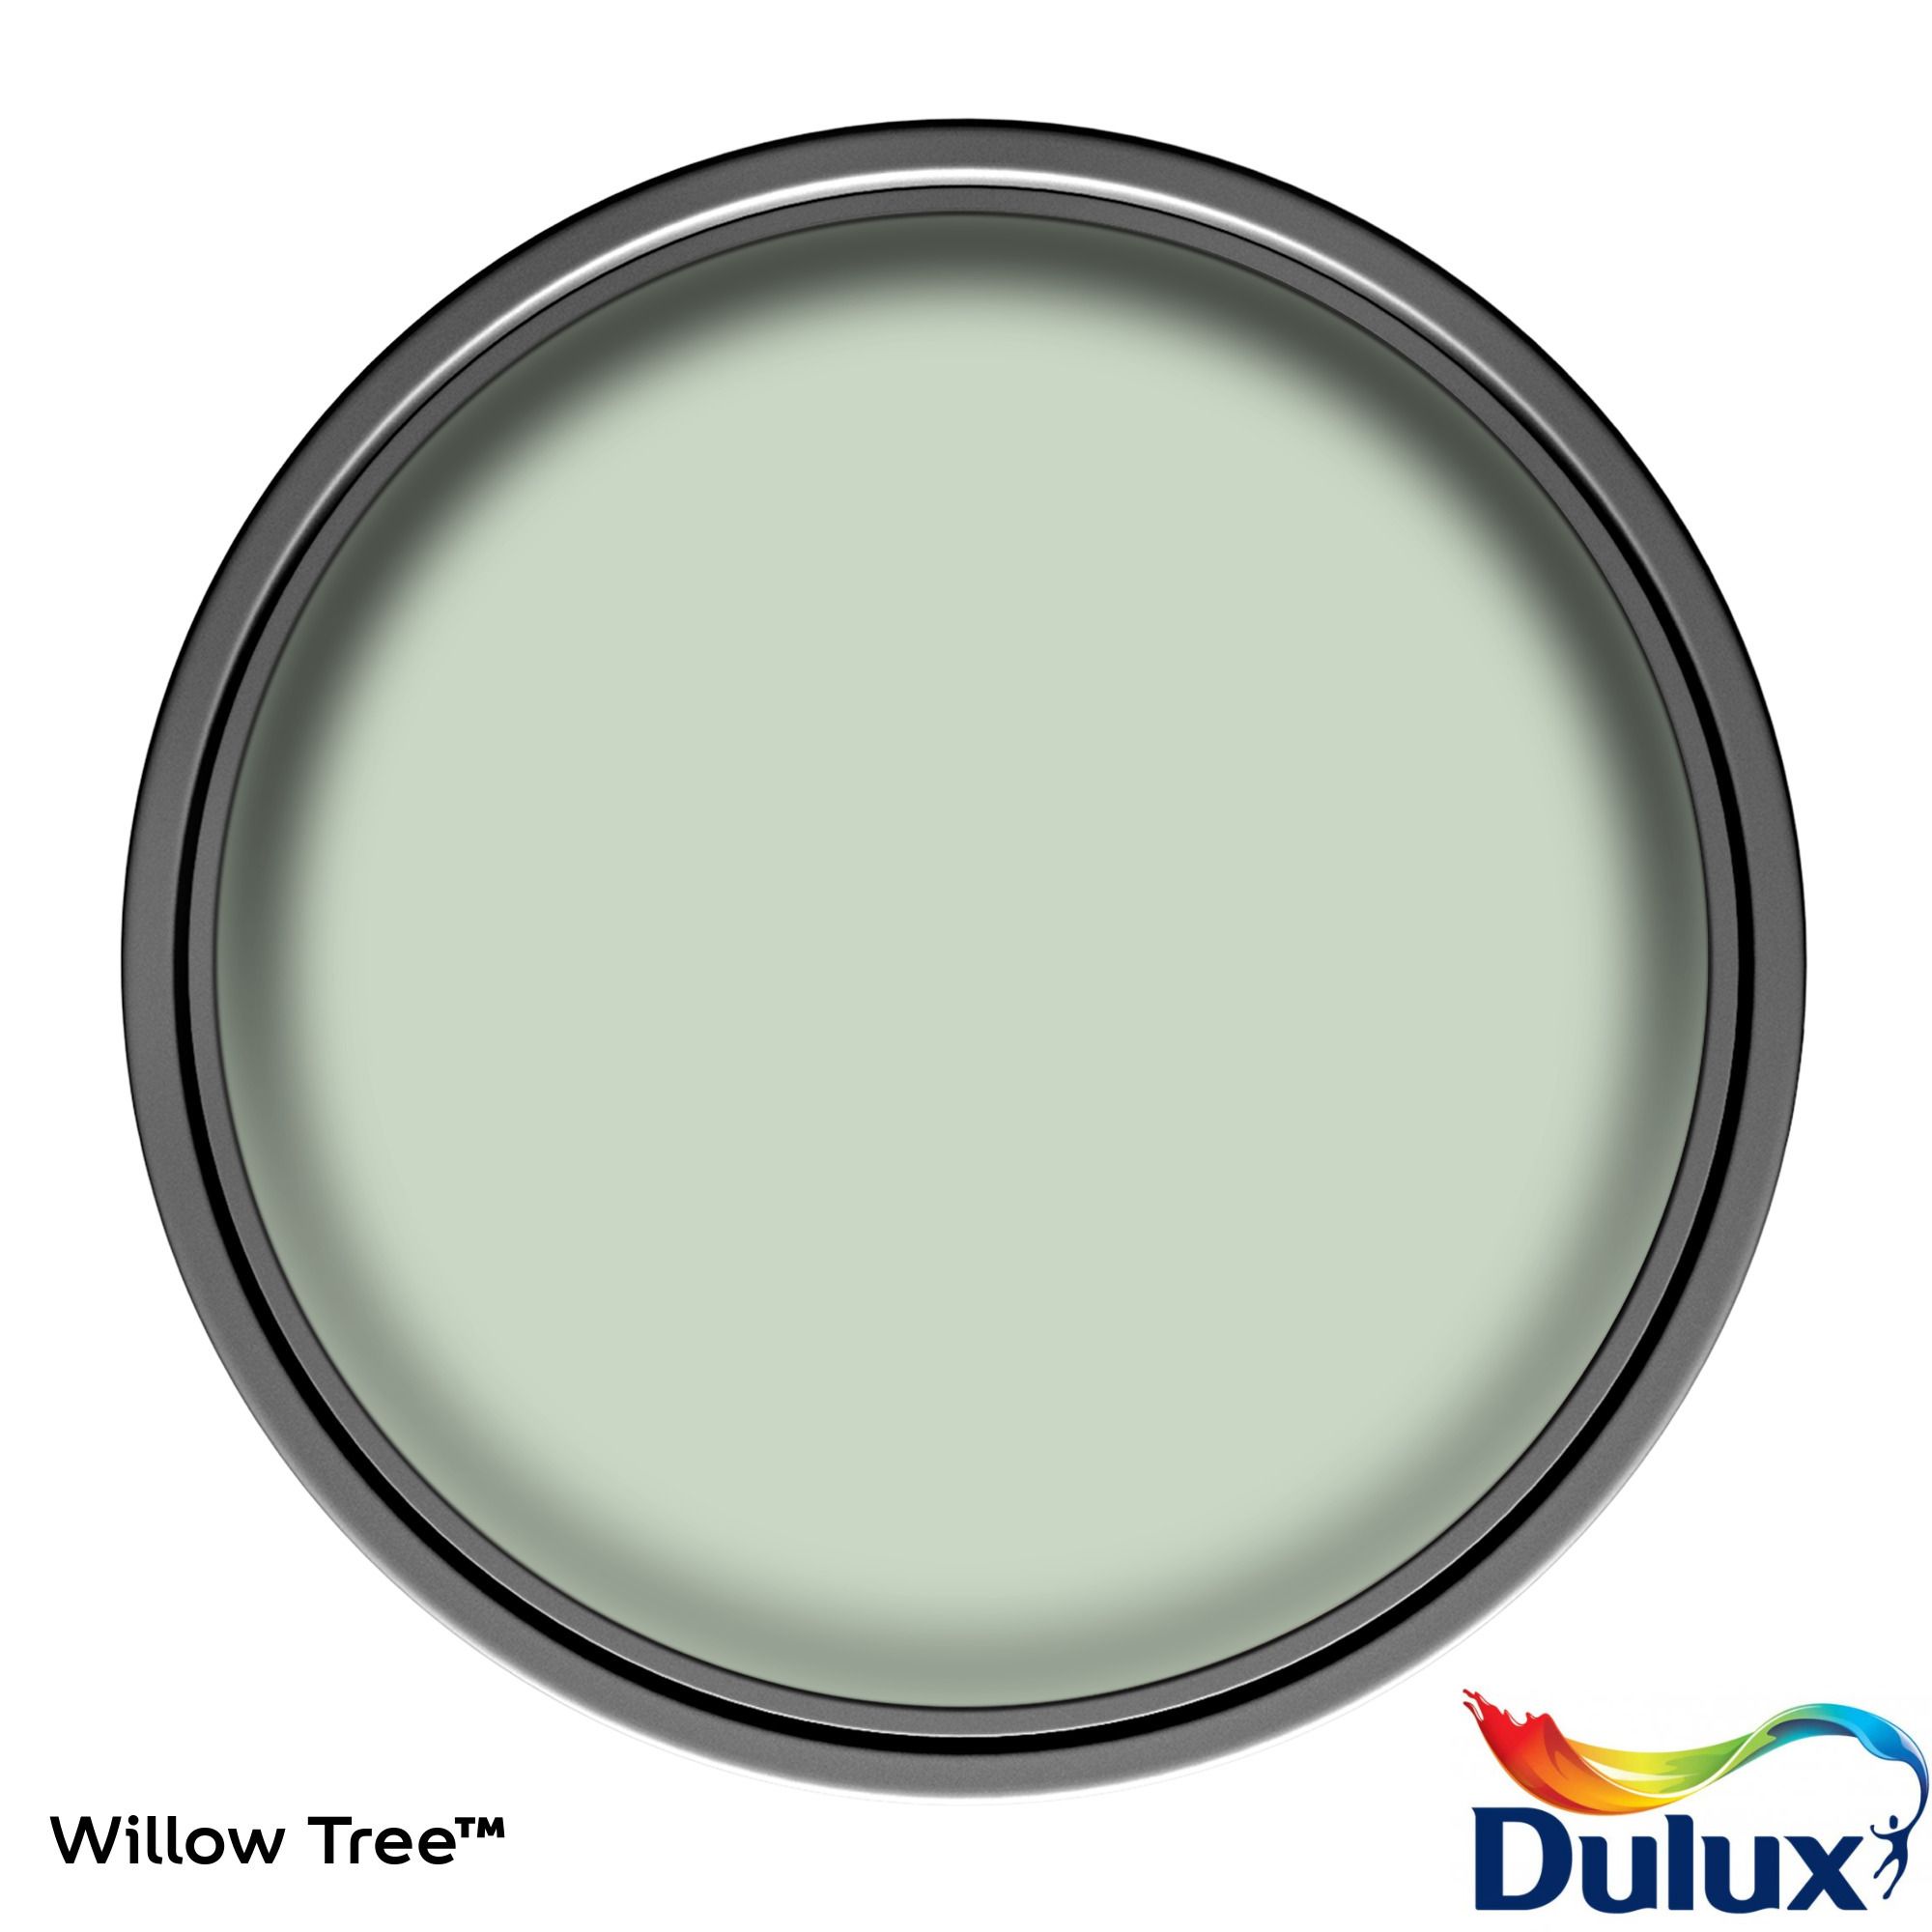 Dulux One coat Willow tree Matt Emulsion paint, 2.5L